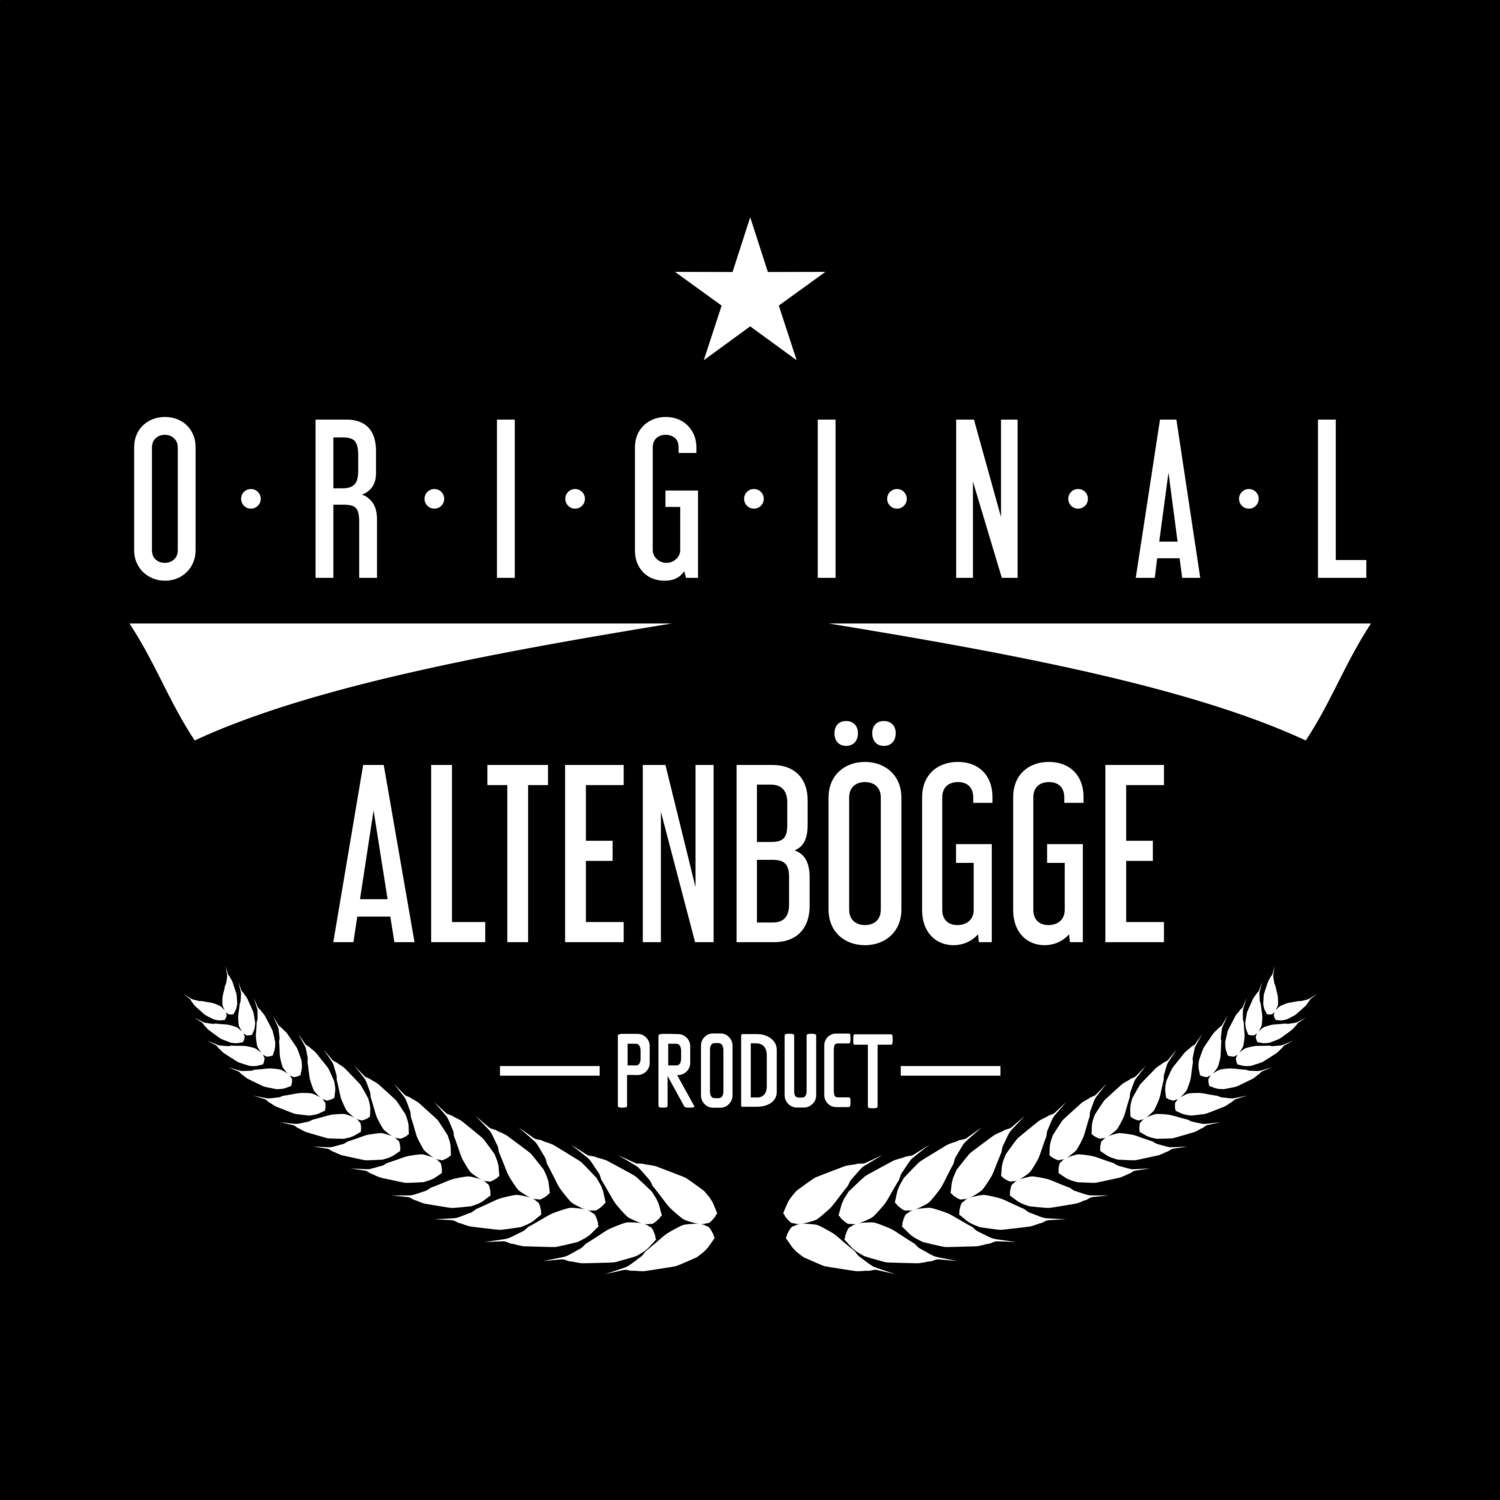 Altenbögge T-Shirt »Original Product«